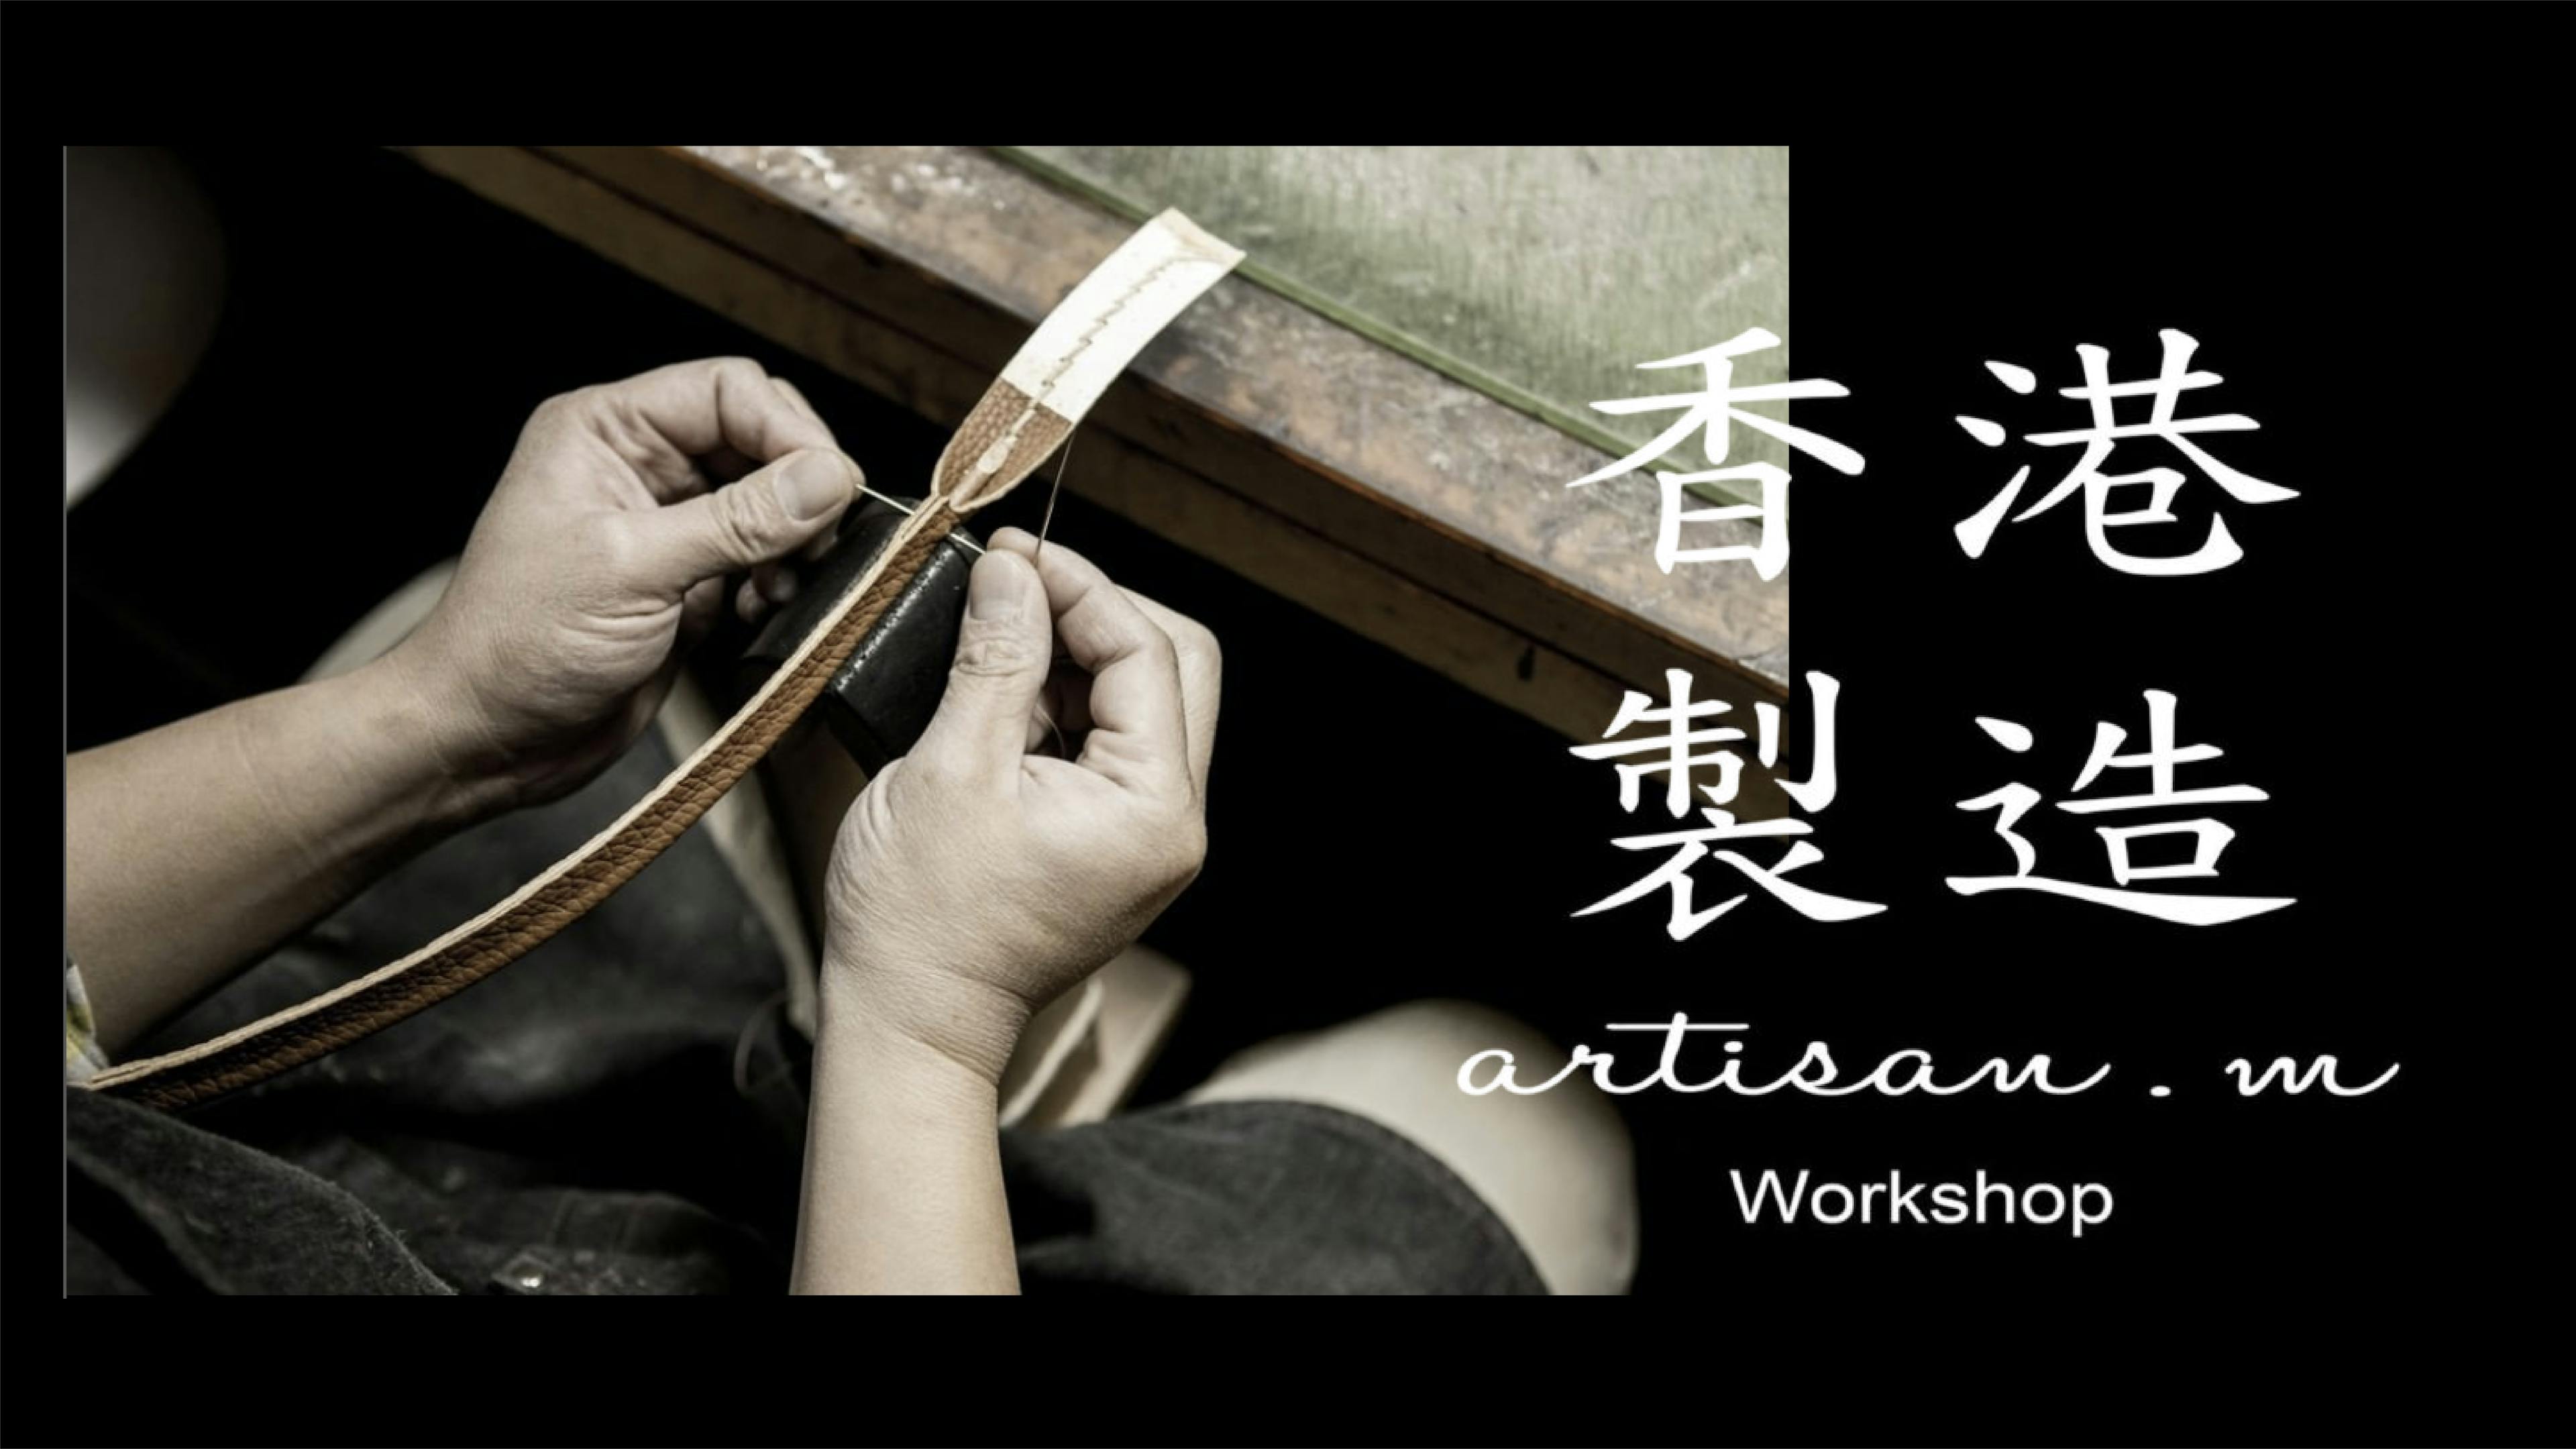 Artisan M Leather Workshop